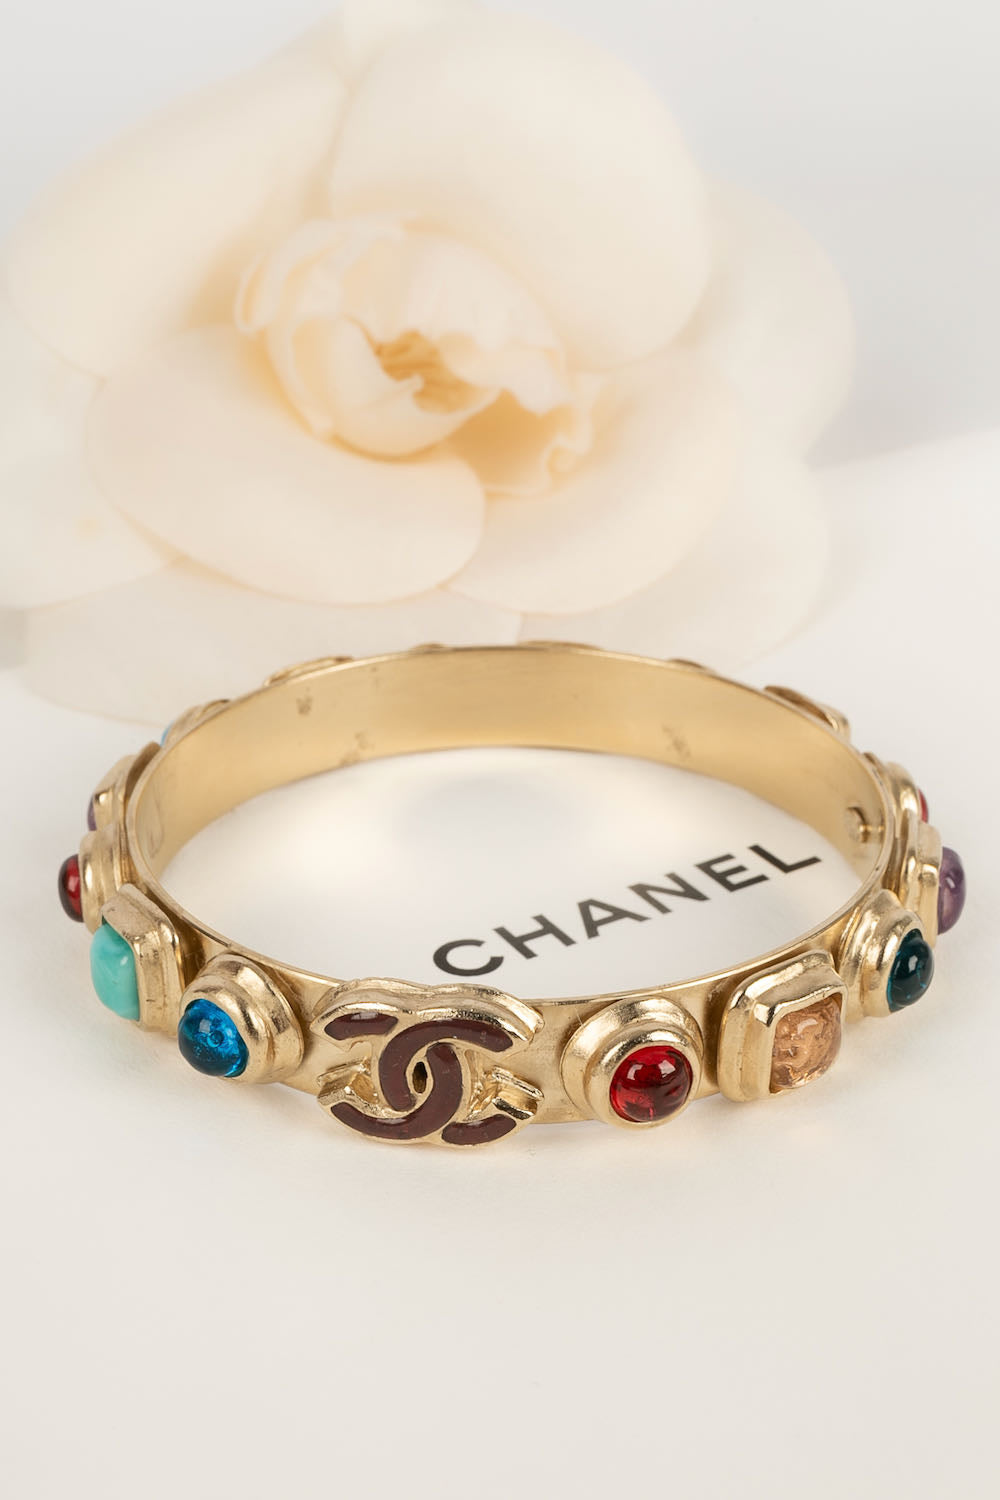 Bracelet Chanel 2015